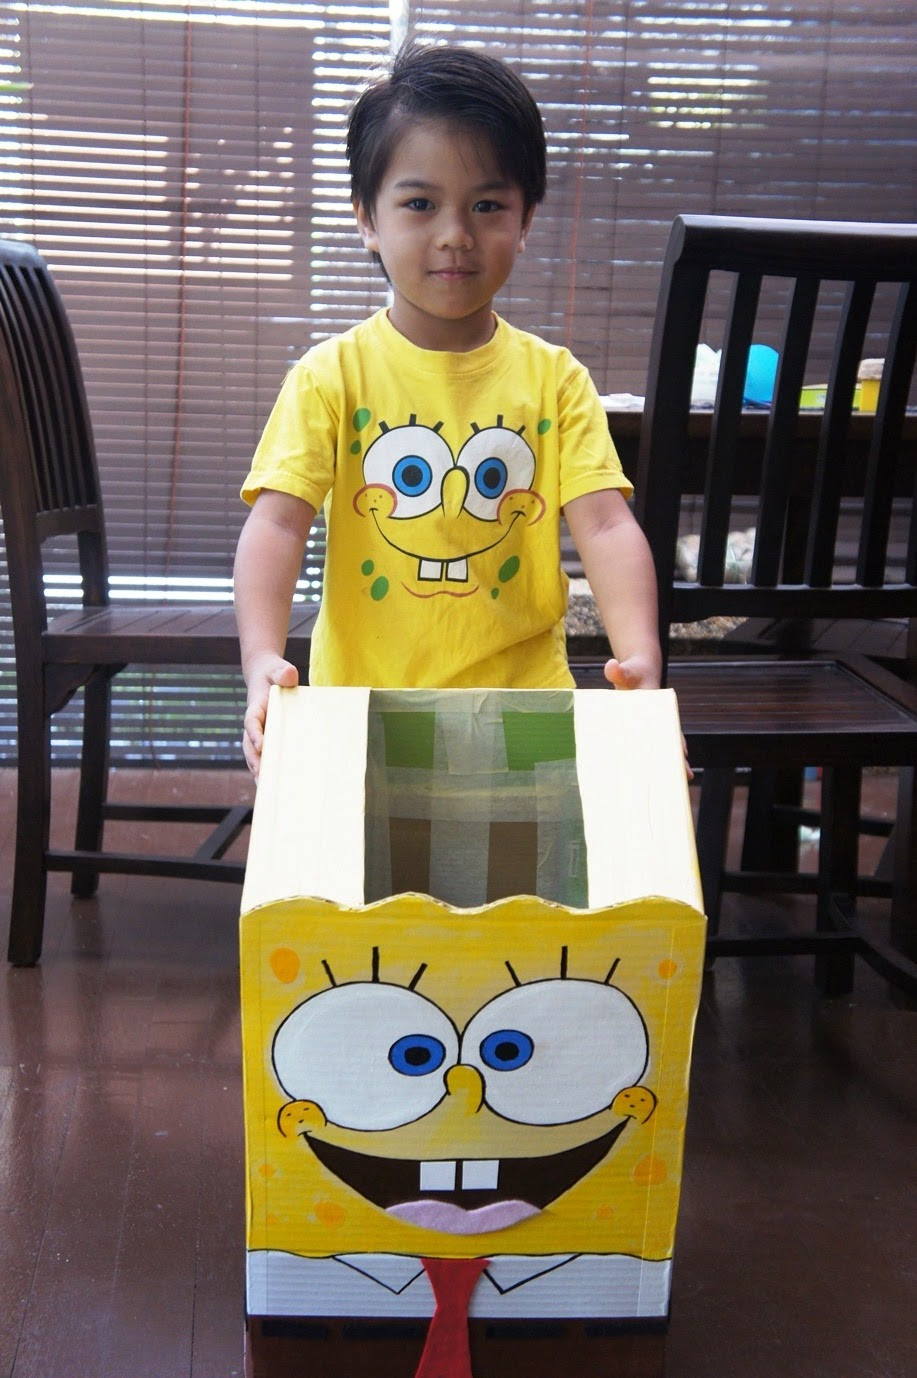 Best ideas about DIY Spongebob Costume
. Save or Pin SpongeBob DIY Costume My Life & Memories Now.